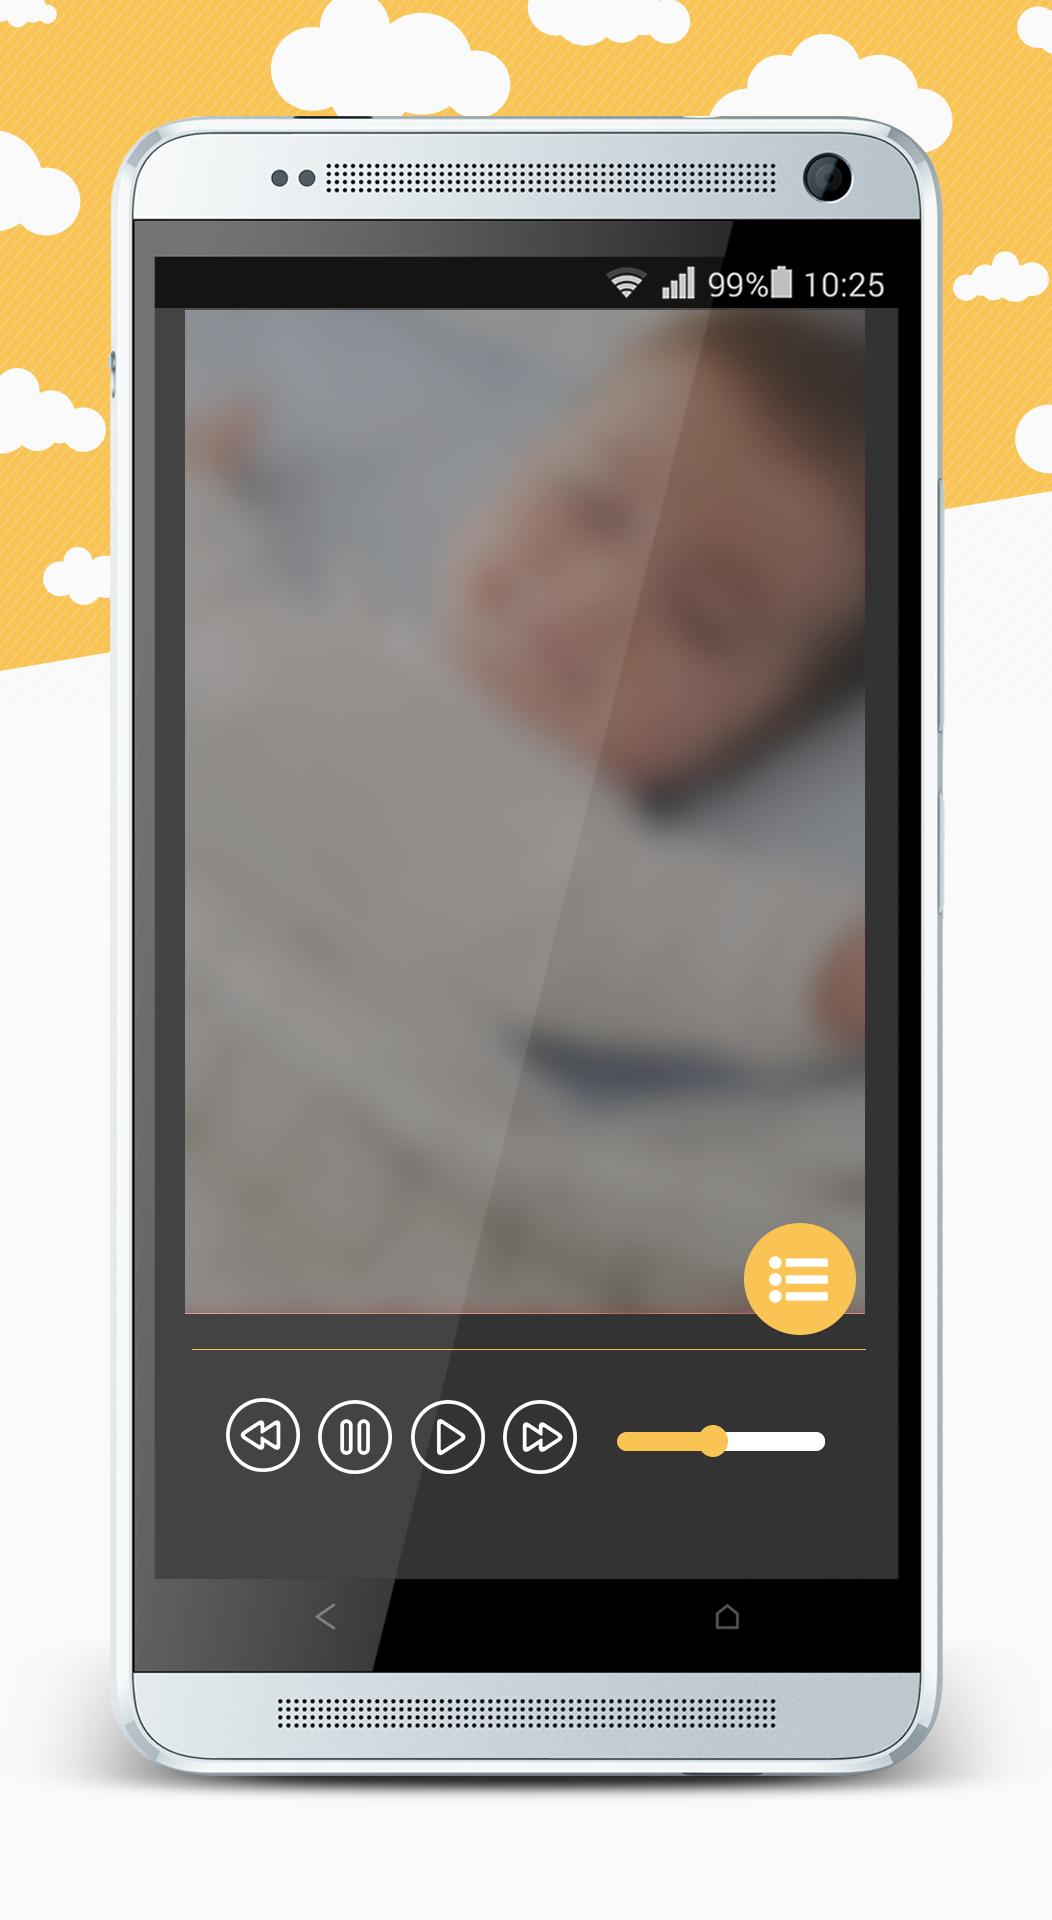 اغاني اطفال للنوم بدون انترنت For Android Apk Download